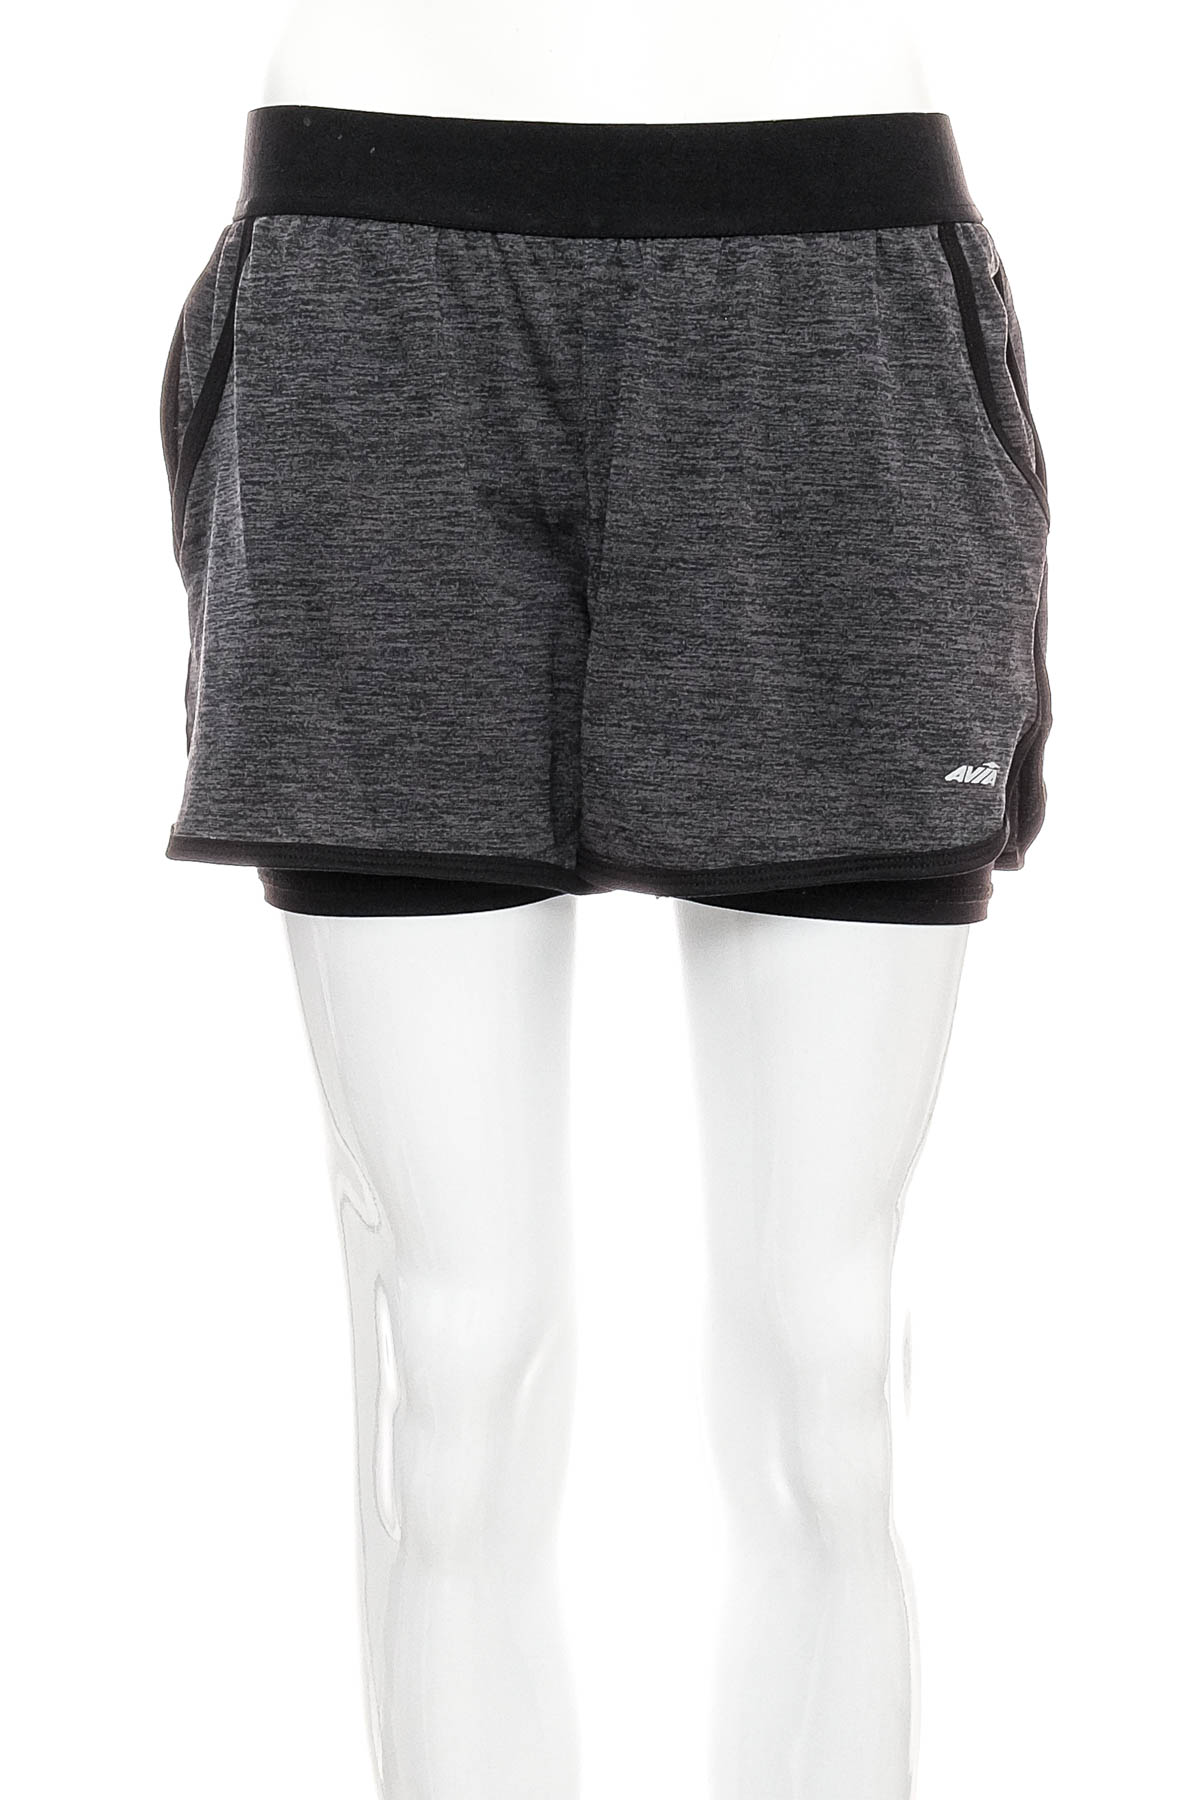 Women's shorts - AVIA - 0